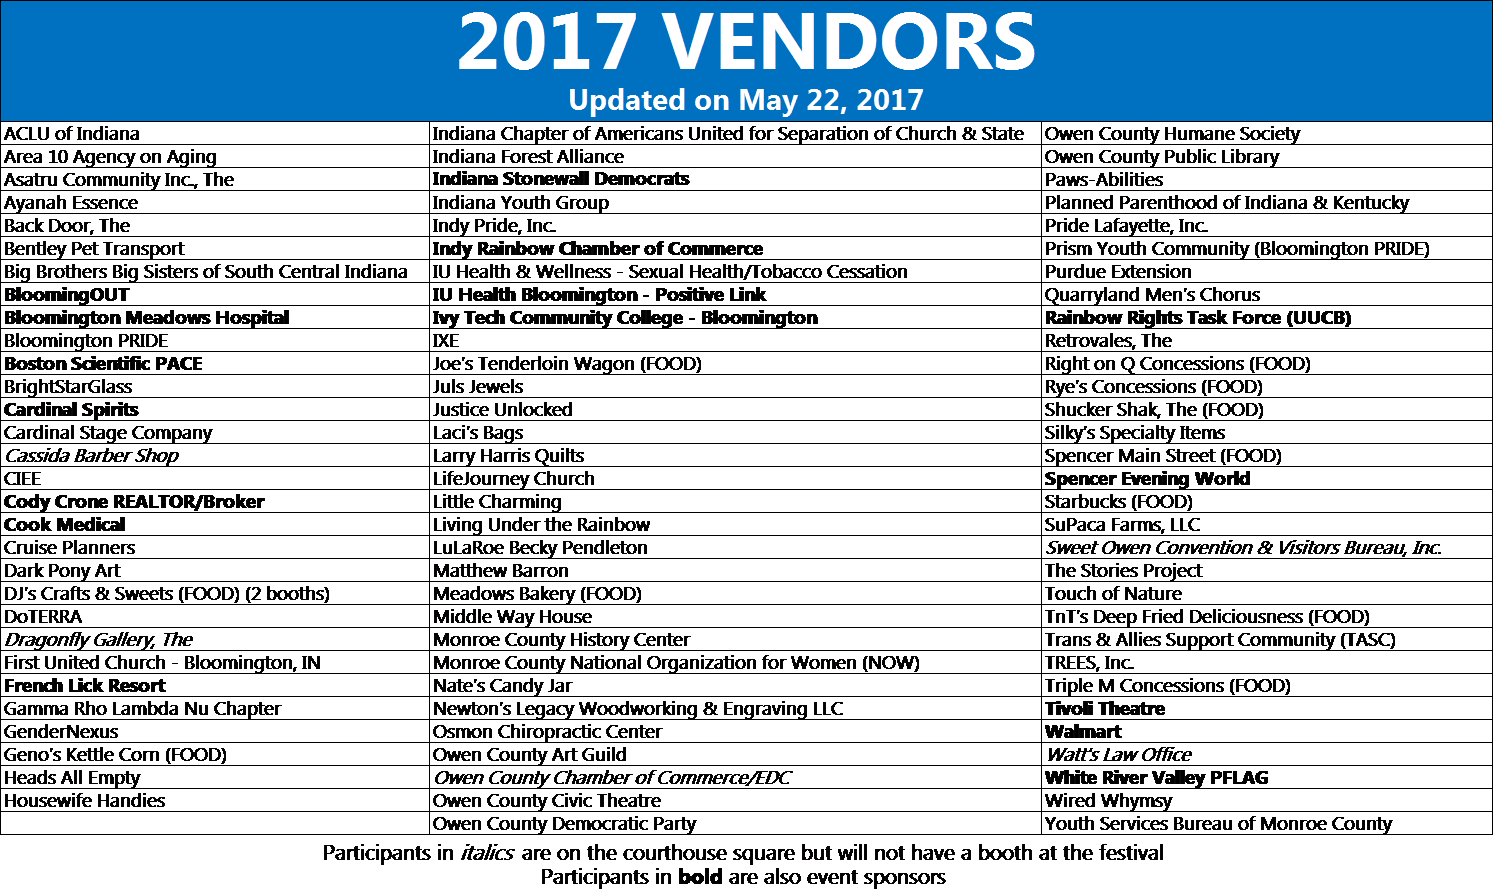 Vendors as of 22MAY17